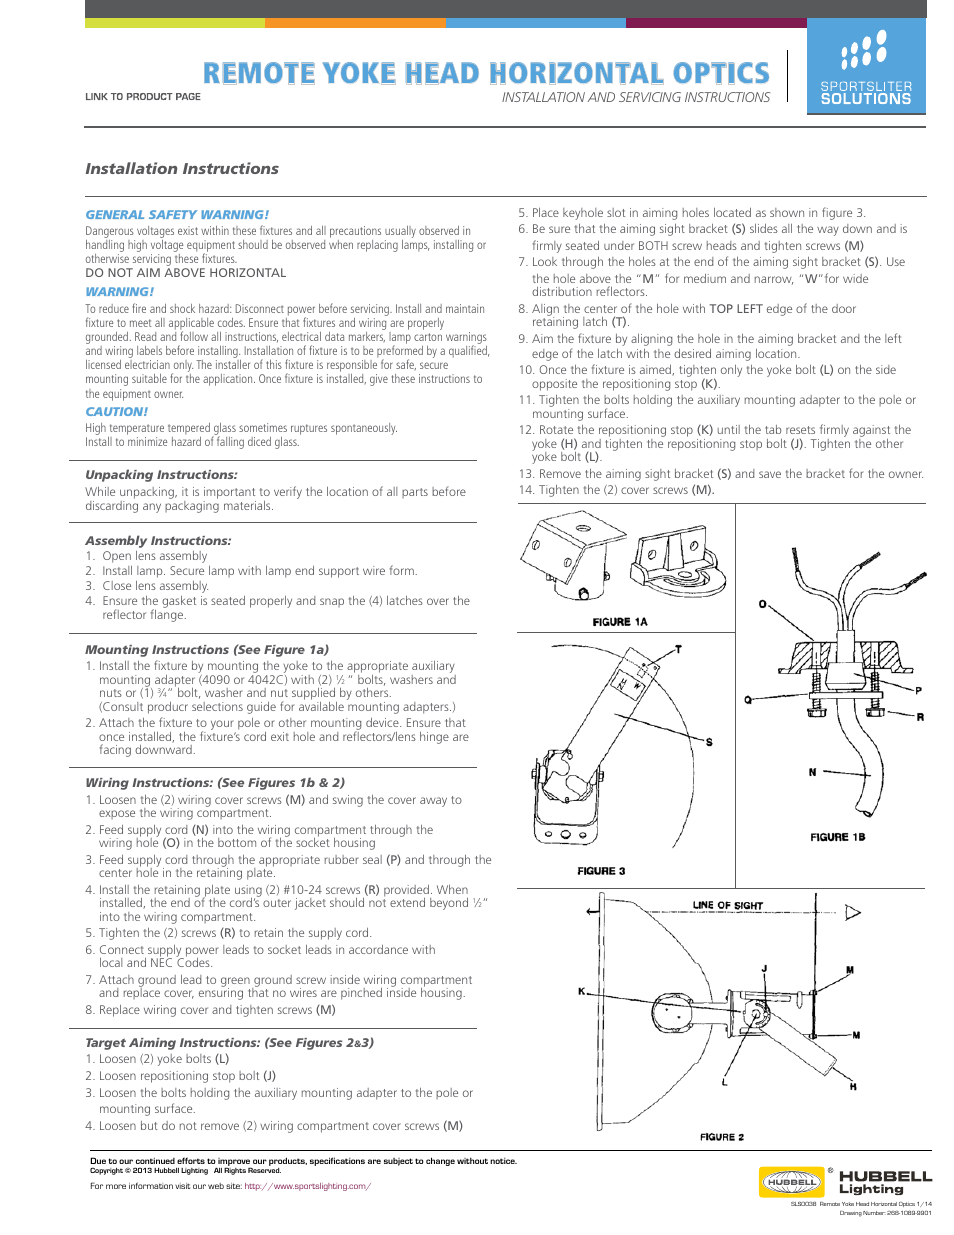 Sportsliter Solutions SLS Remote Yoke Horizontal Optics User Manual | 1 page